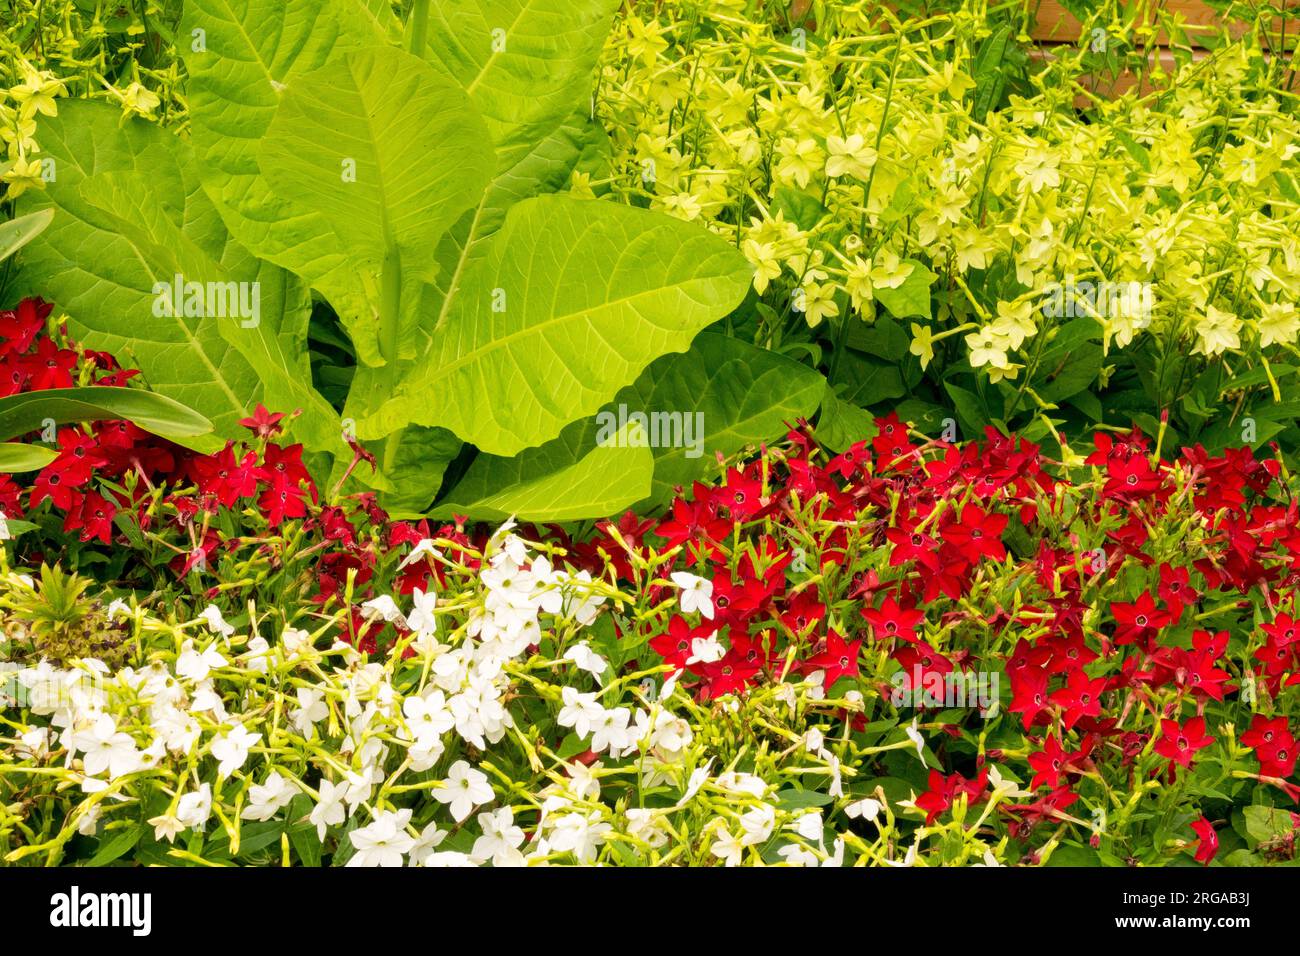 Flowering Tobacco, Garden, Nicotiana alata Lime Green and Nicotiana alata Saratoga Red, Tobacco, Border, Bedding plants red yellow white green Stock Photo